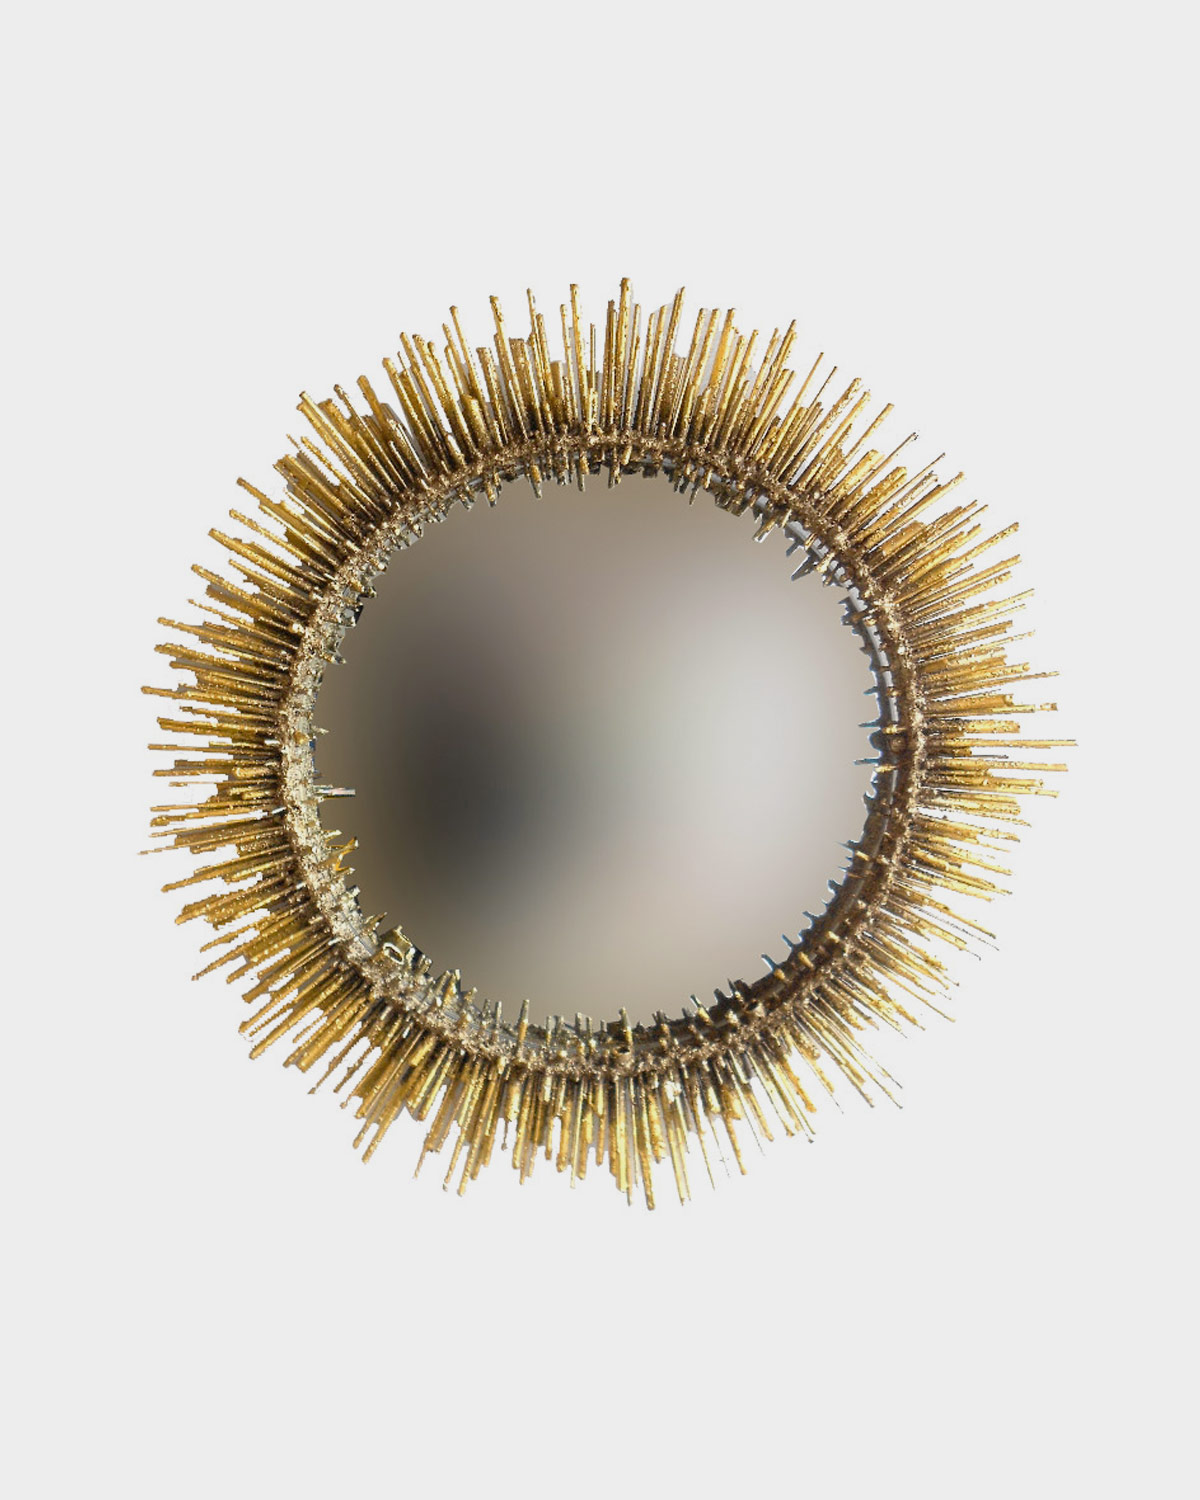 The Urchin Wall Mirror by James Bearden